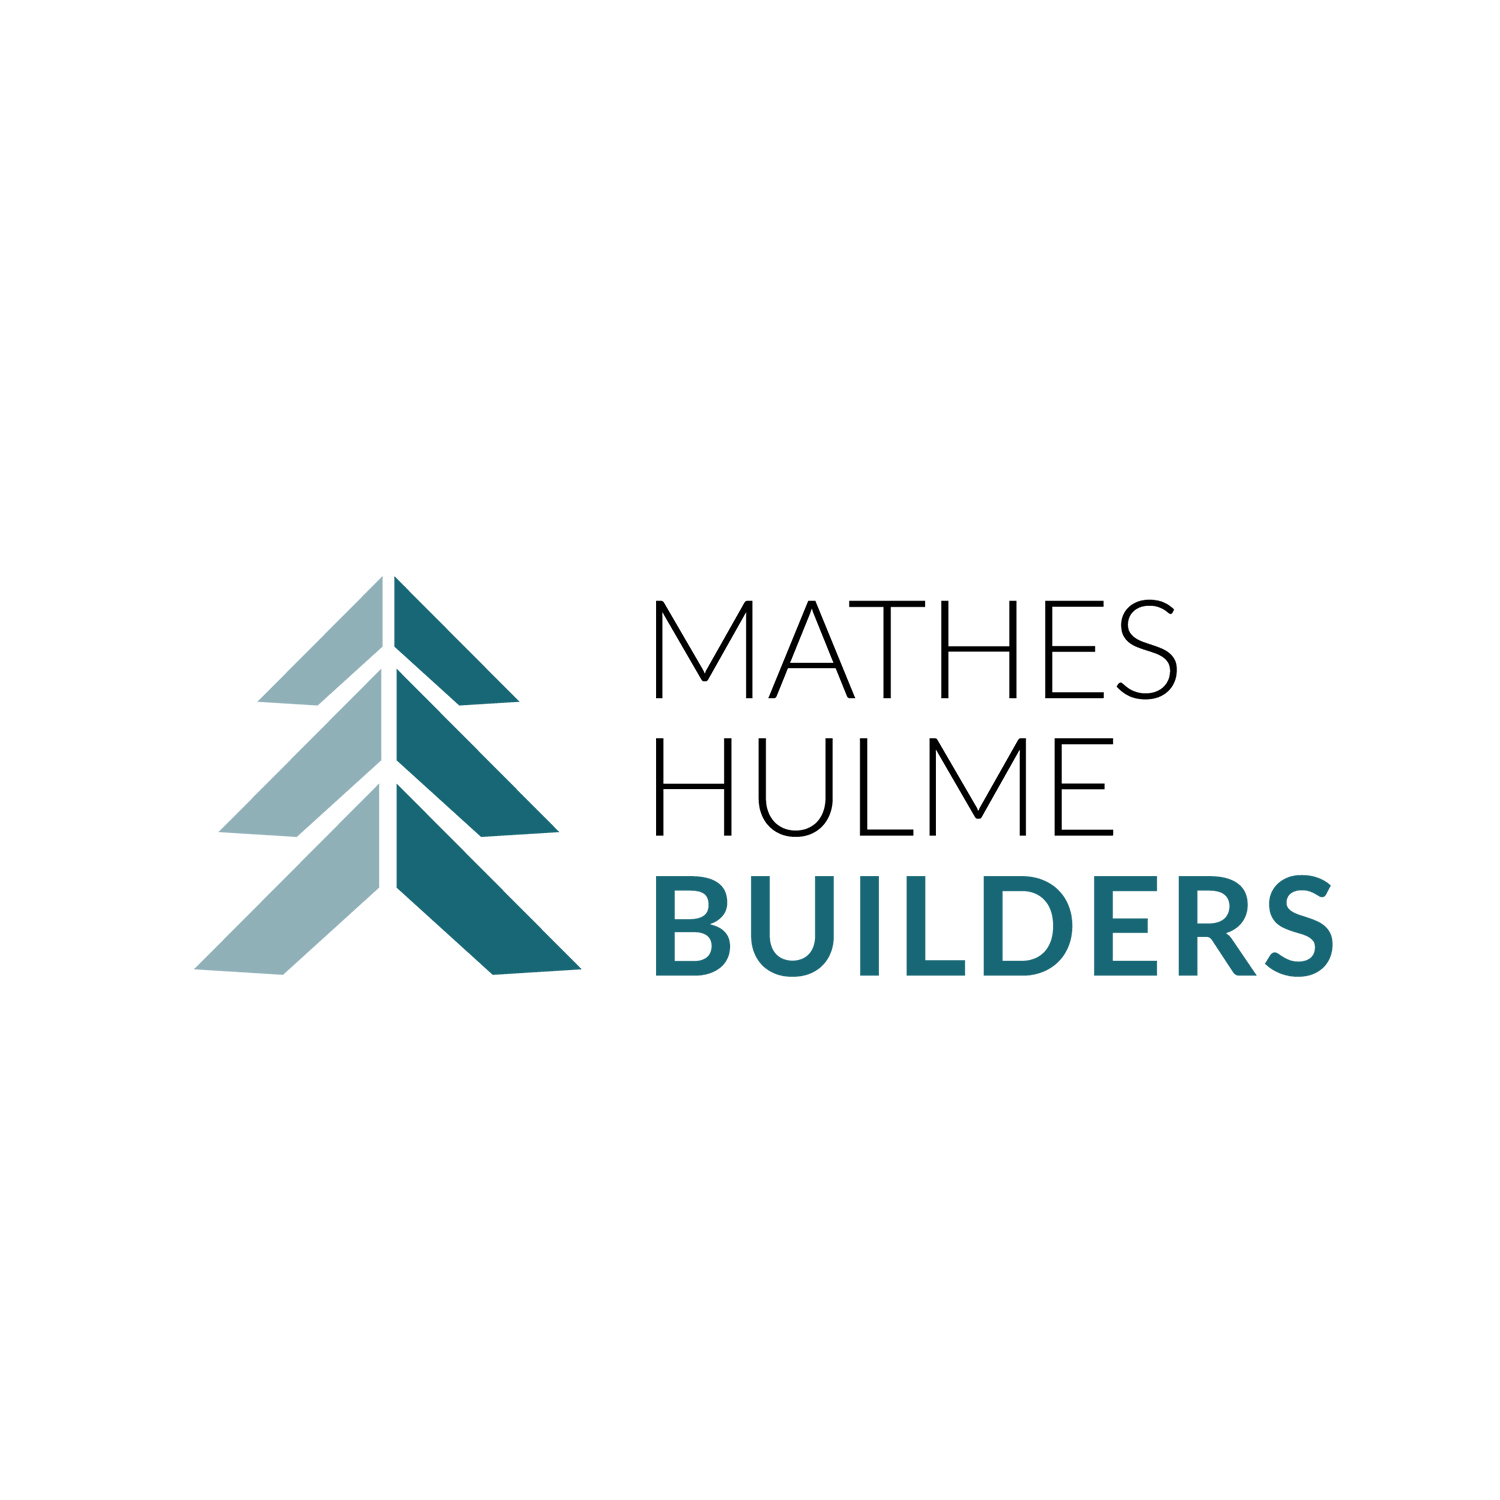 Mathes Hulme Builders company logo